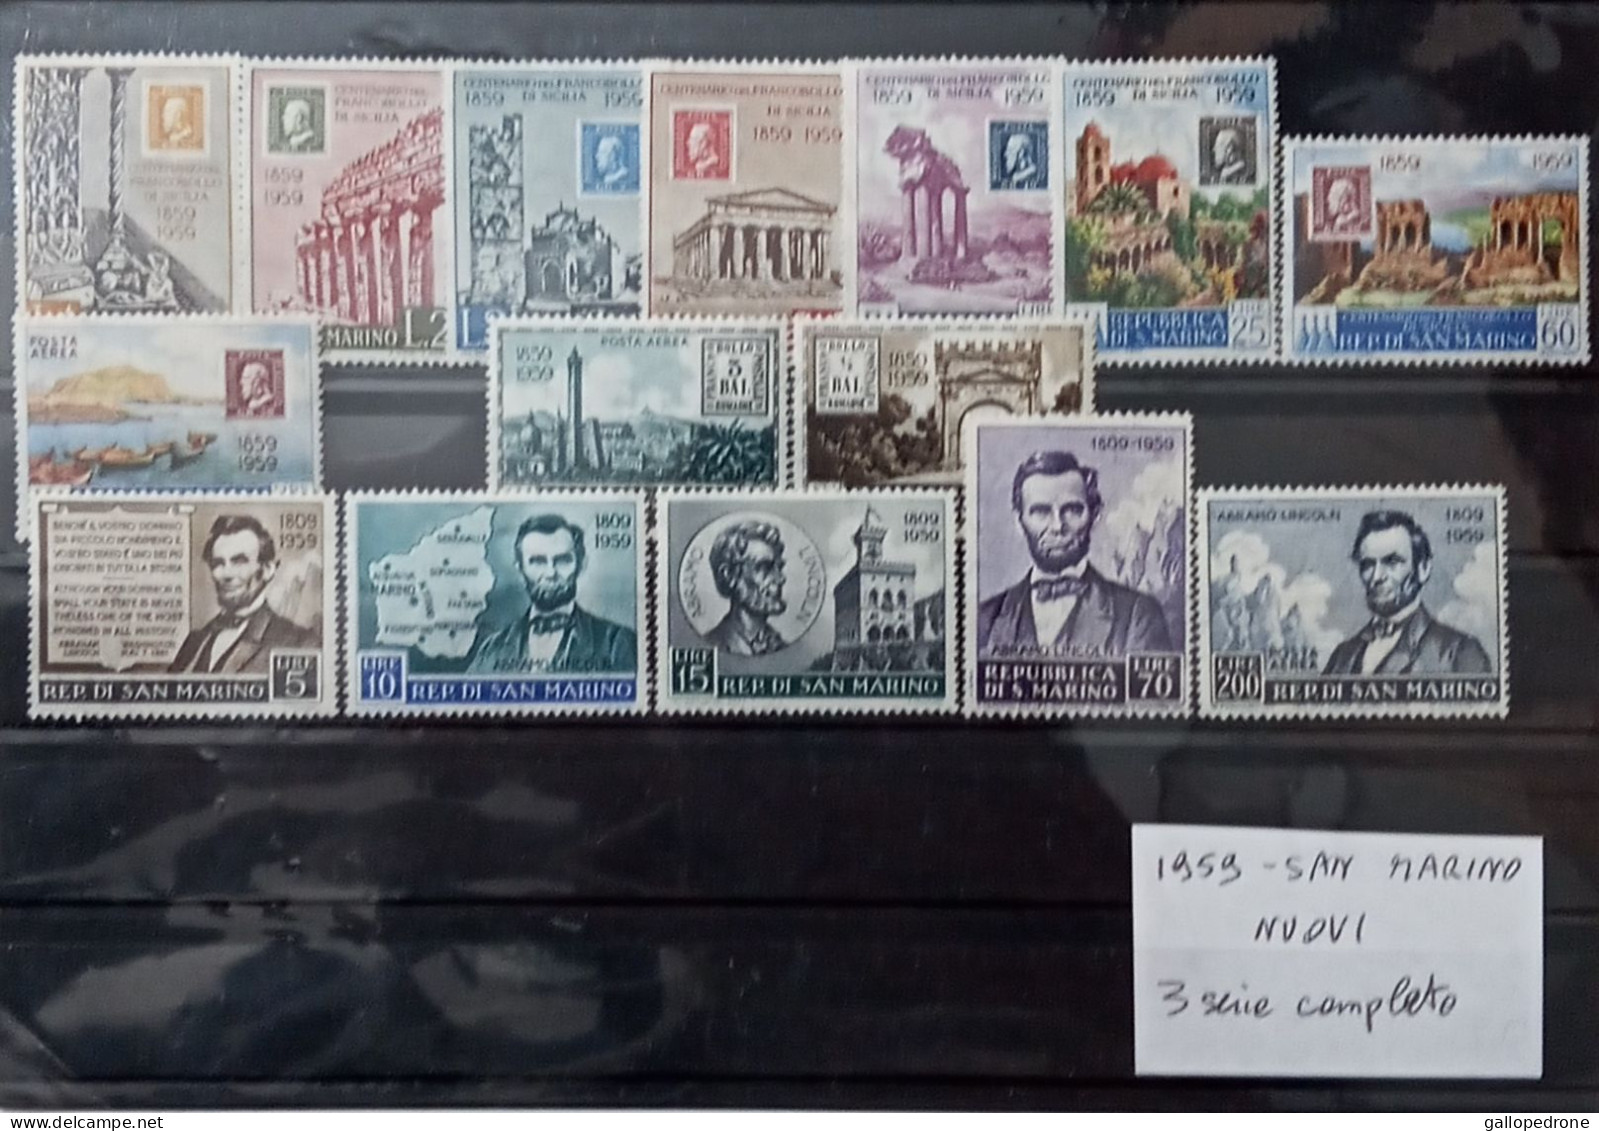 1959 San Marino, 3 Serie Complete-Francobolli Nuovi 15 Valori+3  P.A. -MNH ** - Unused Stamps